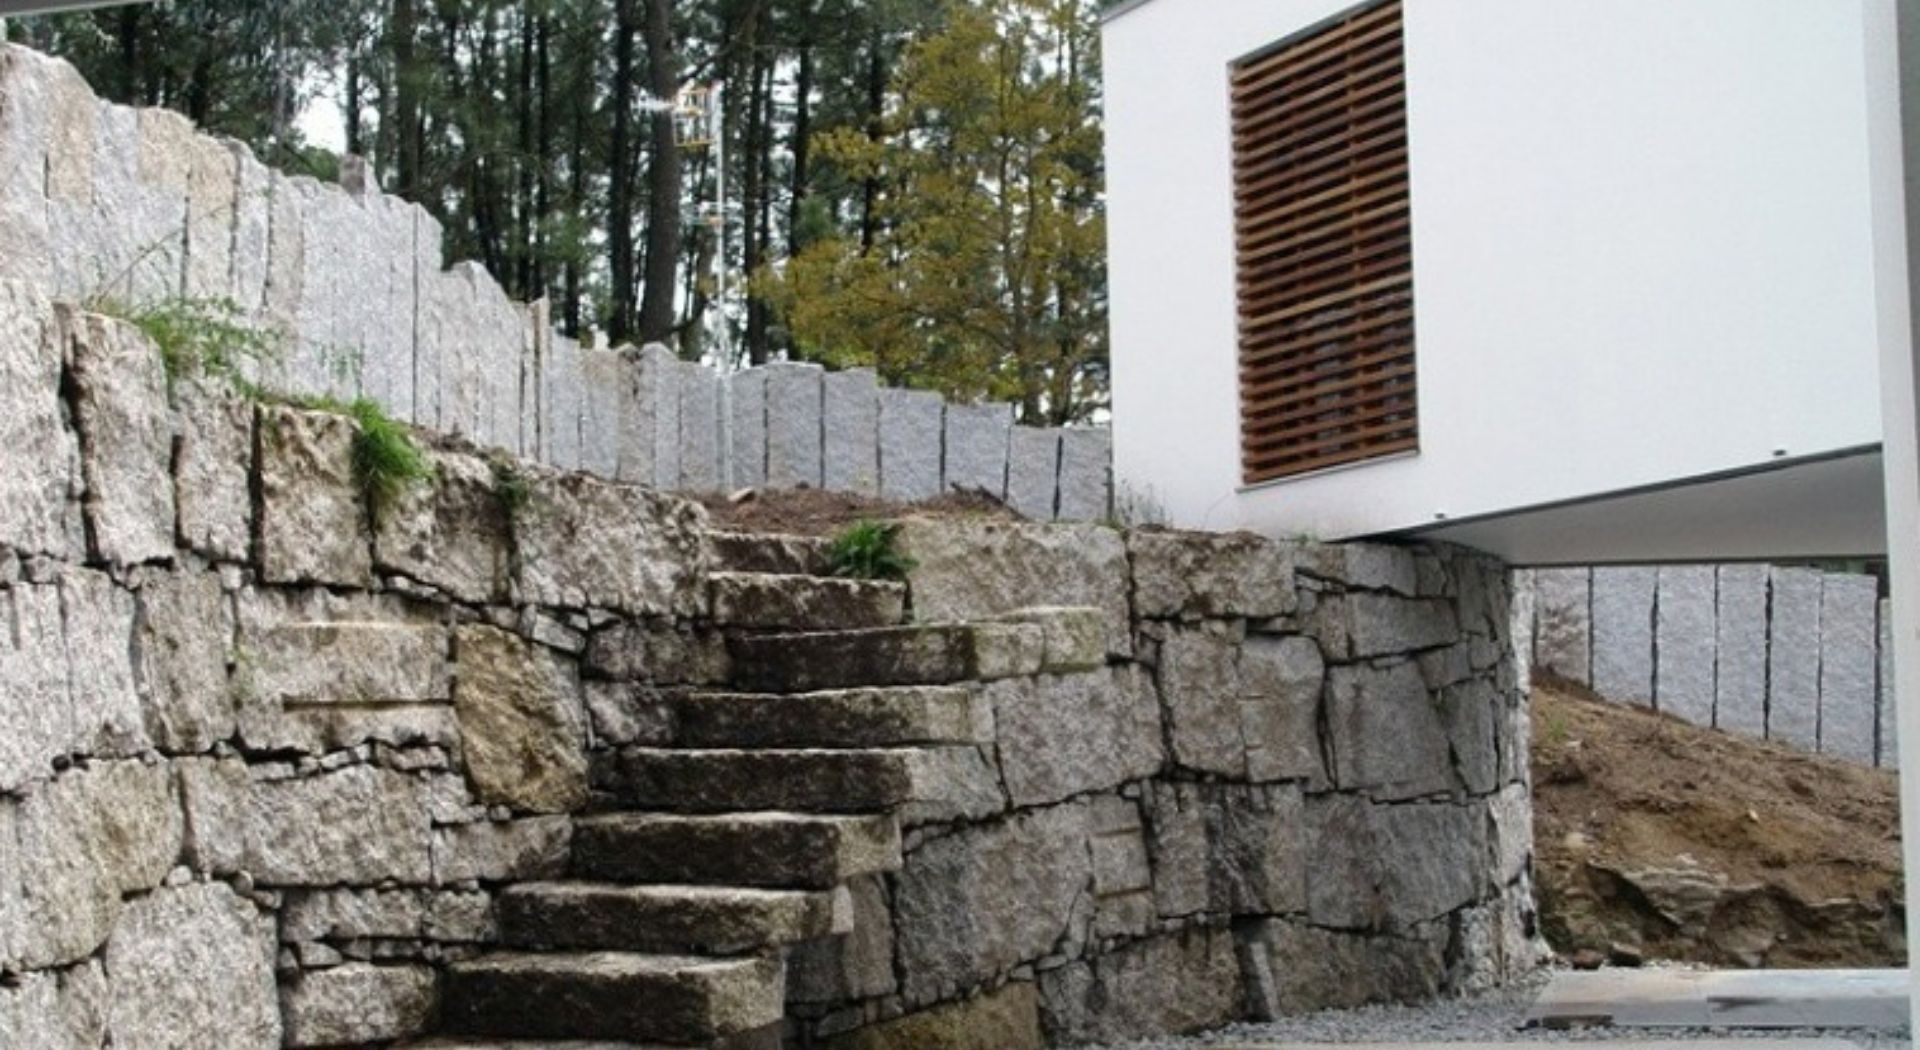 Arquitecto Villagarcía de Arousa vista exterior escaleras piedra